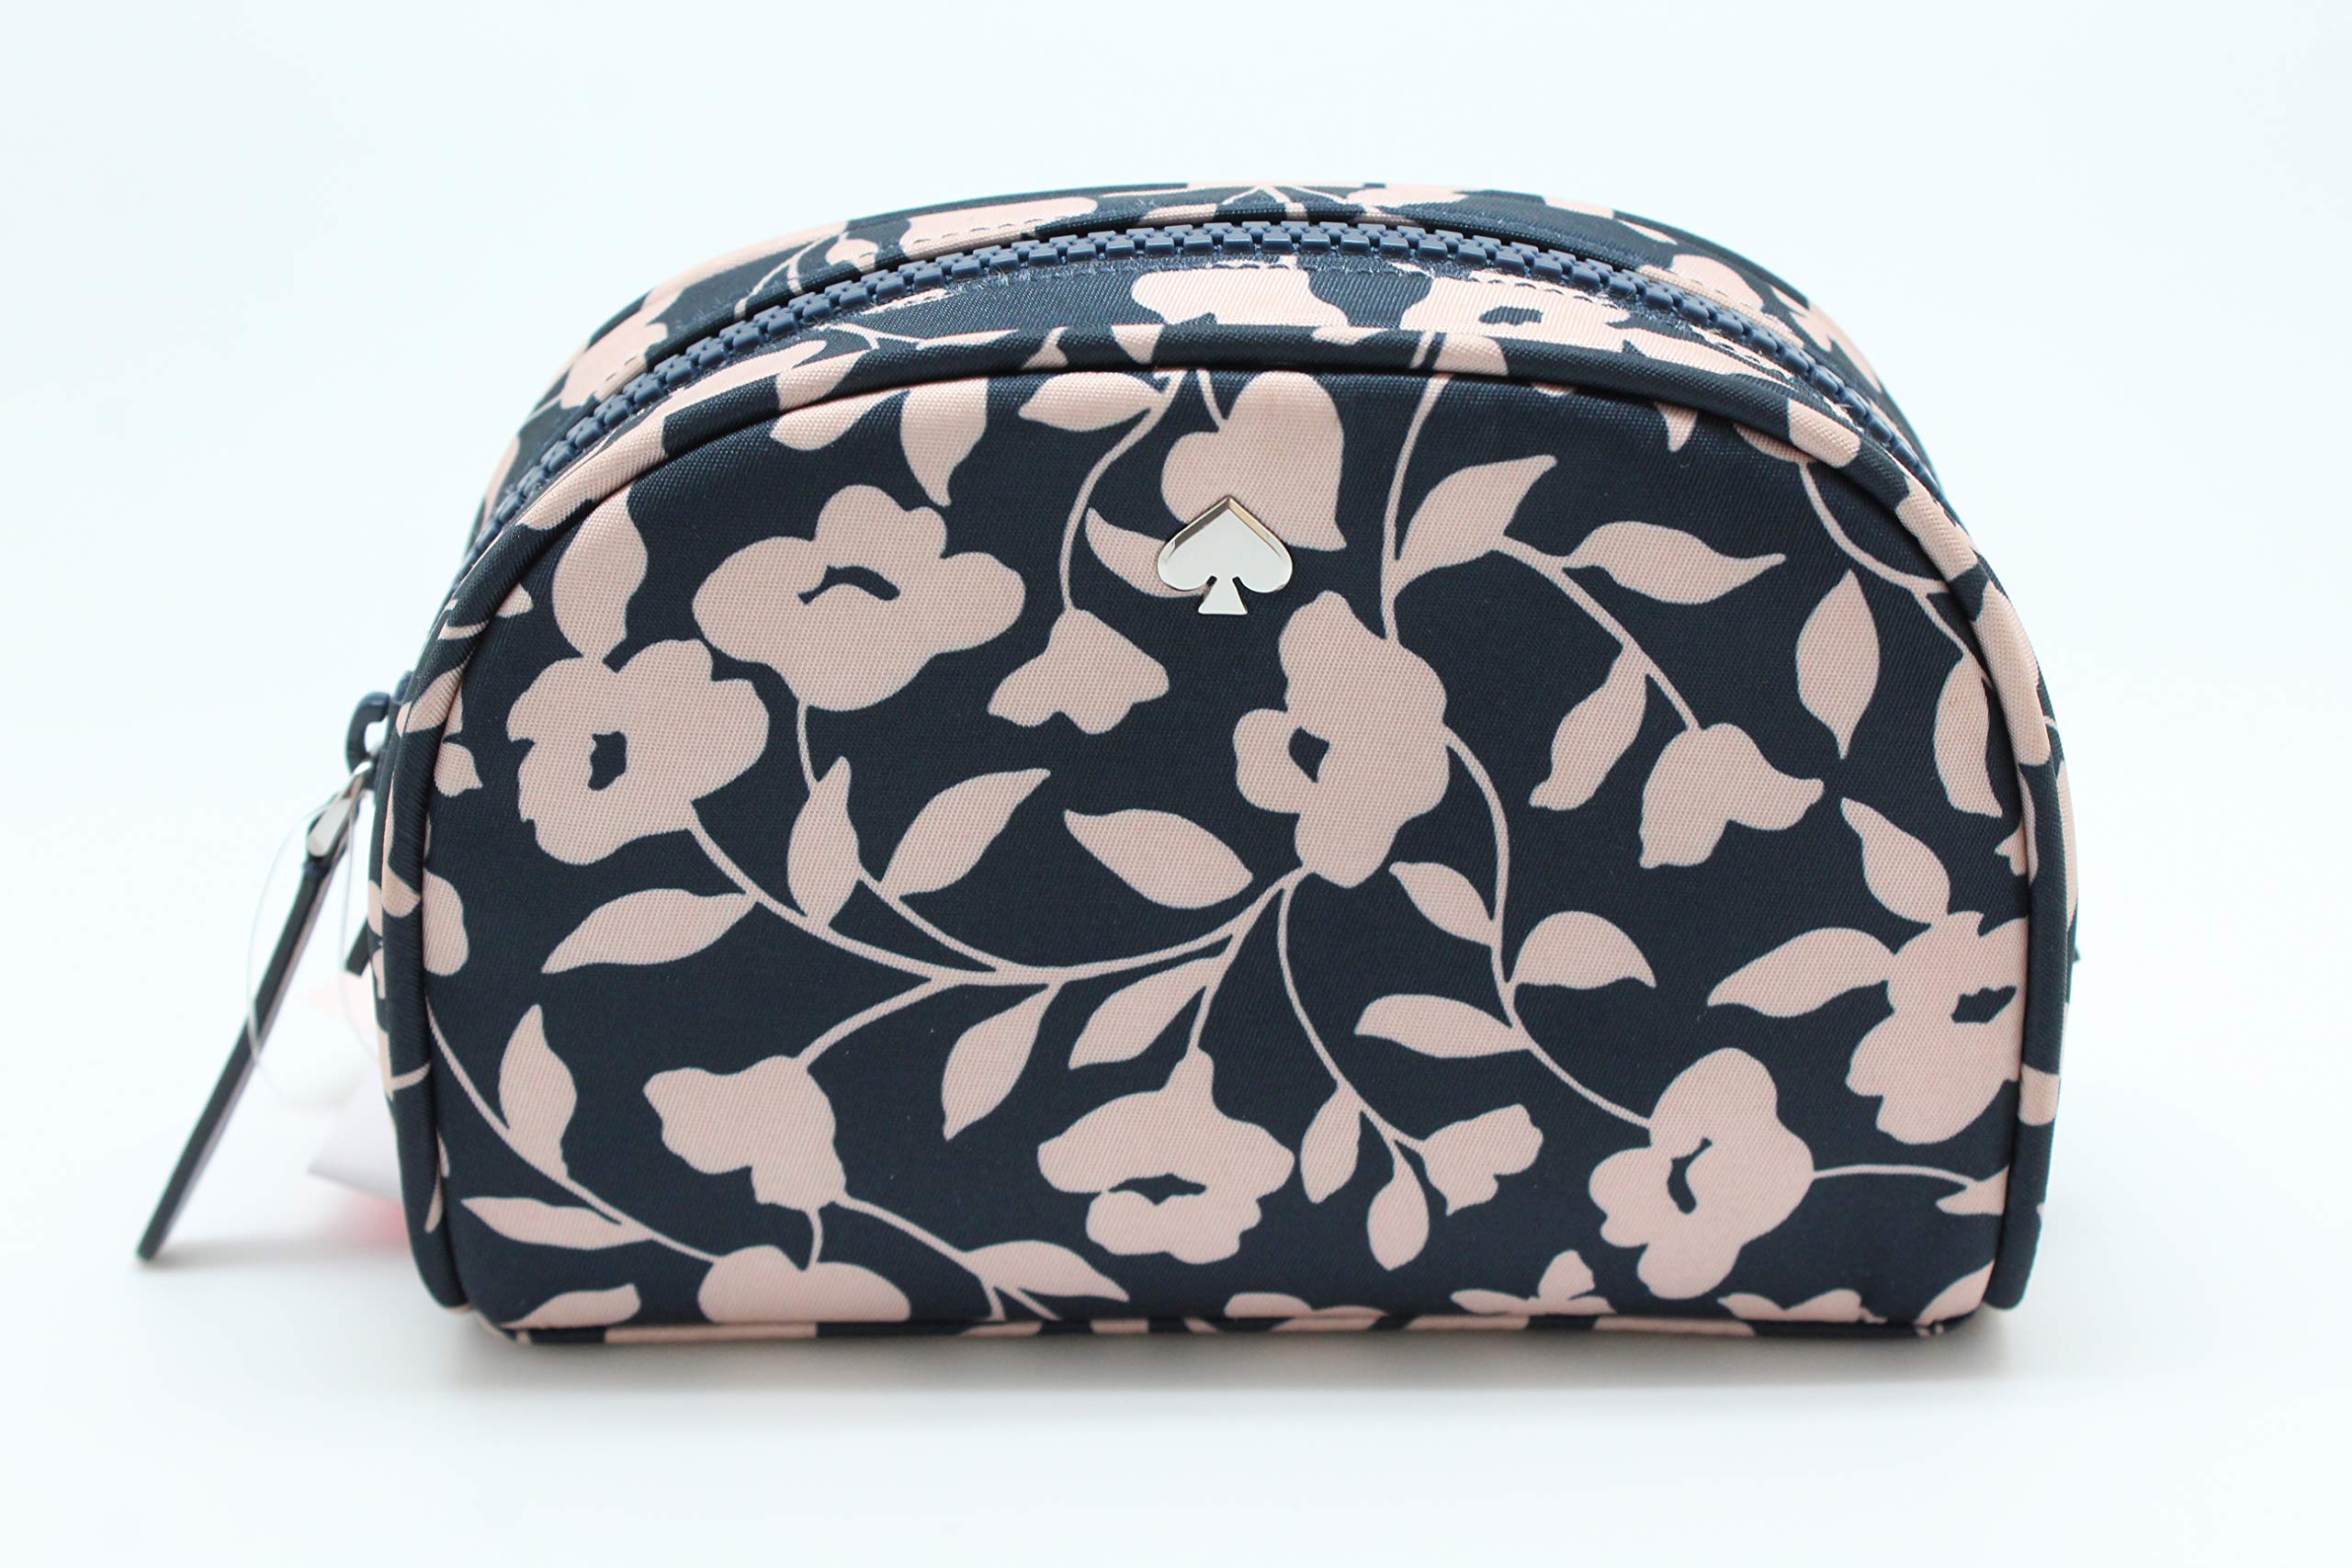 Kate Spade New York Jae Garden Vine Small Dome Cosmetic Case Bag